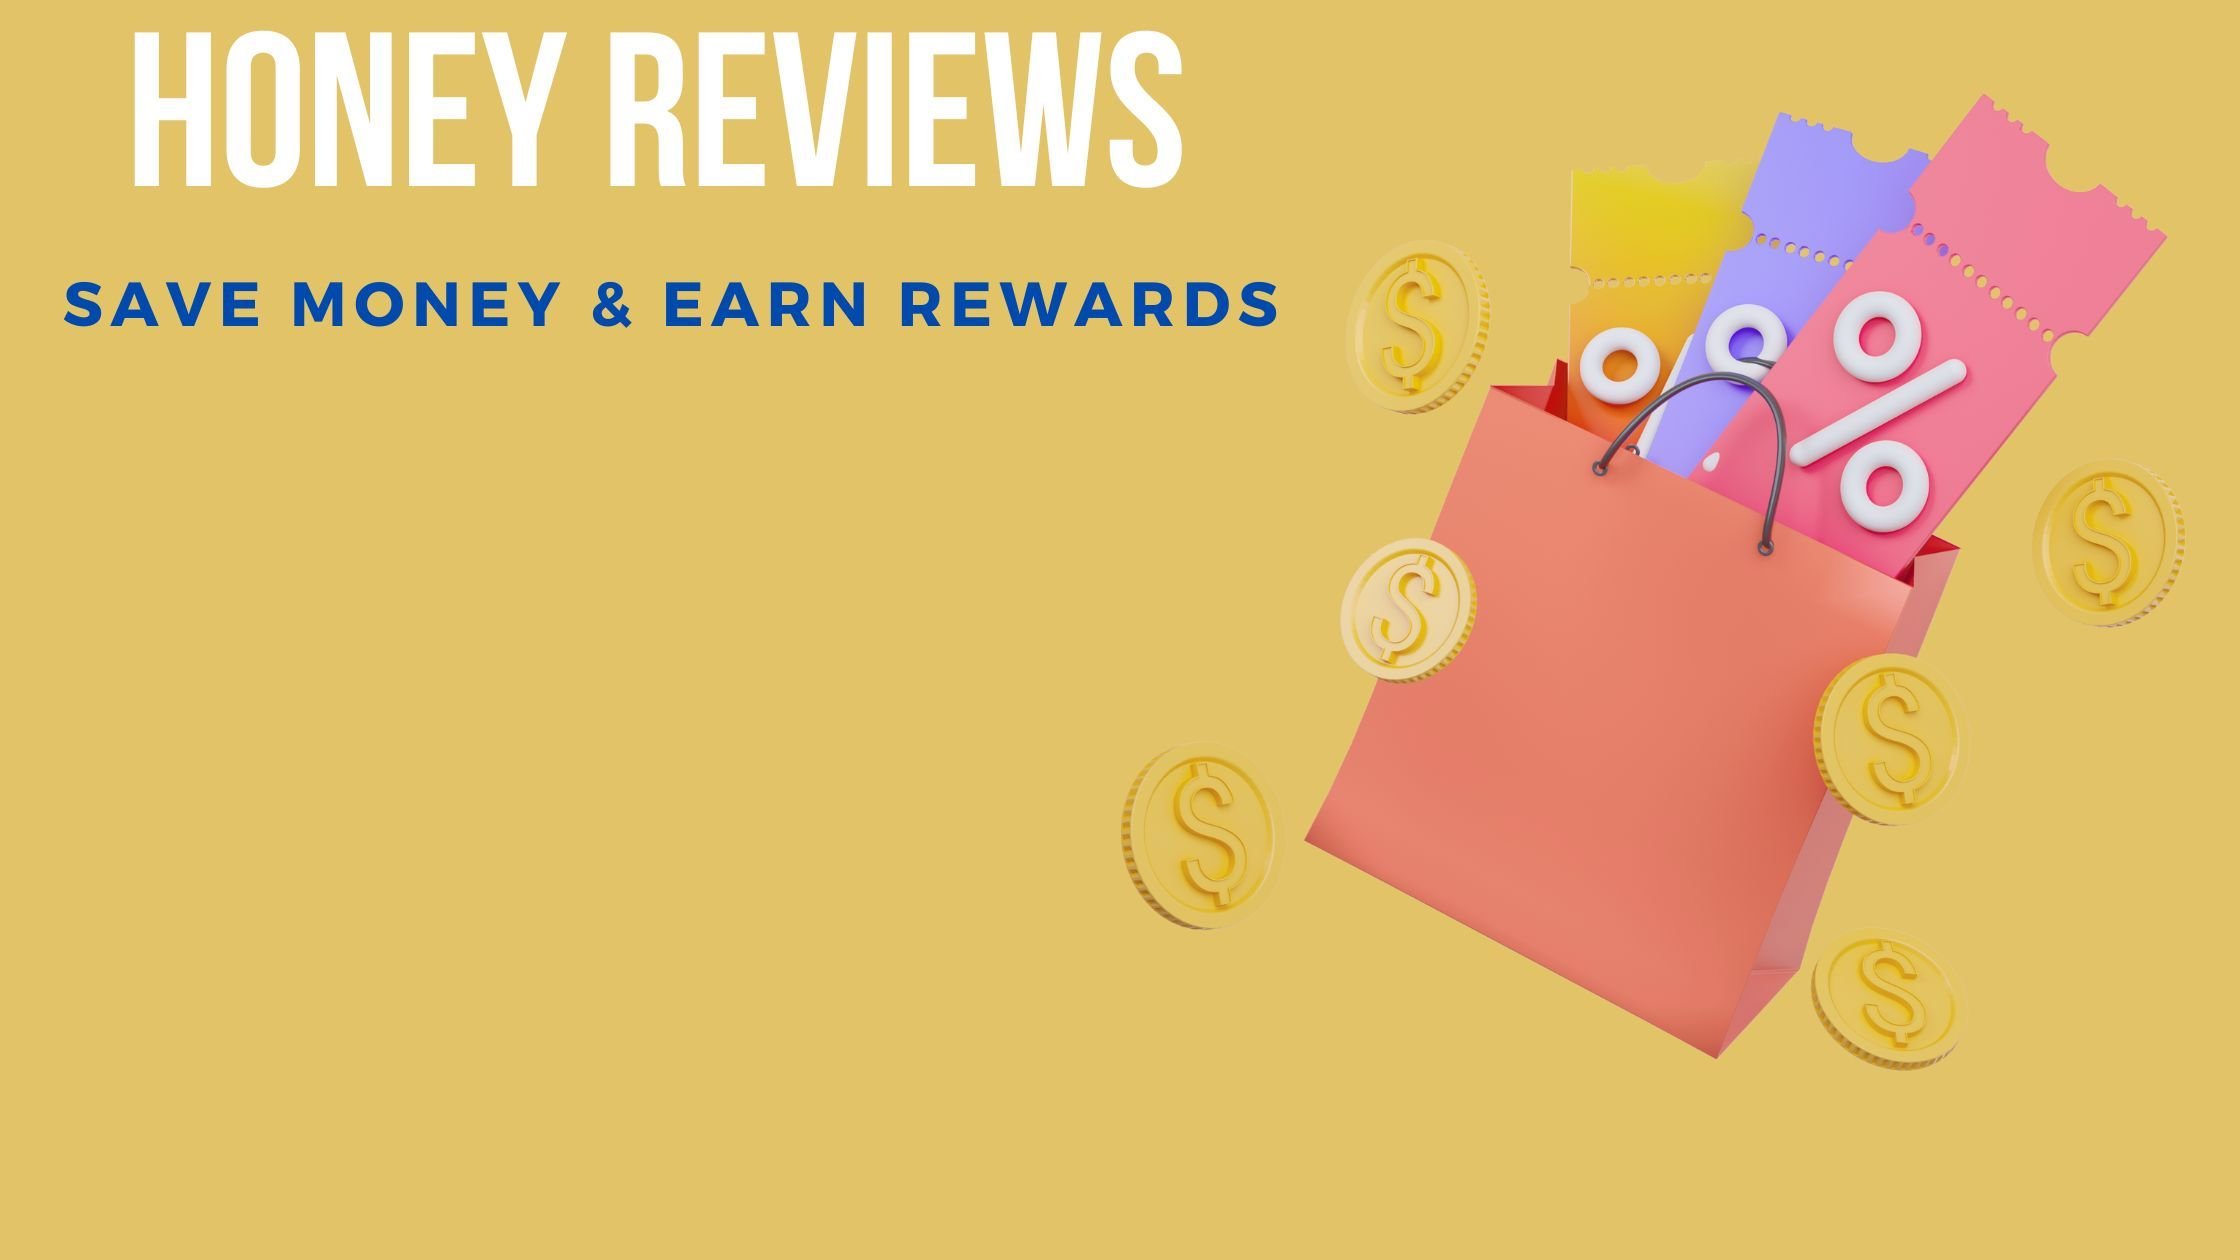 Honey app review-Save Money & Earn Rewards